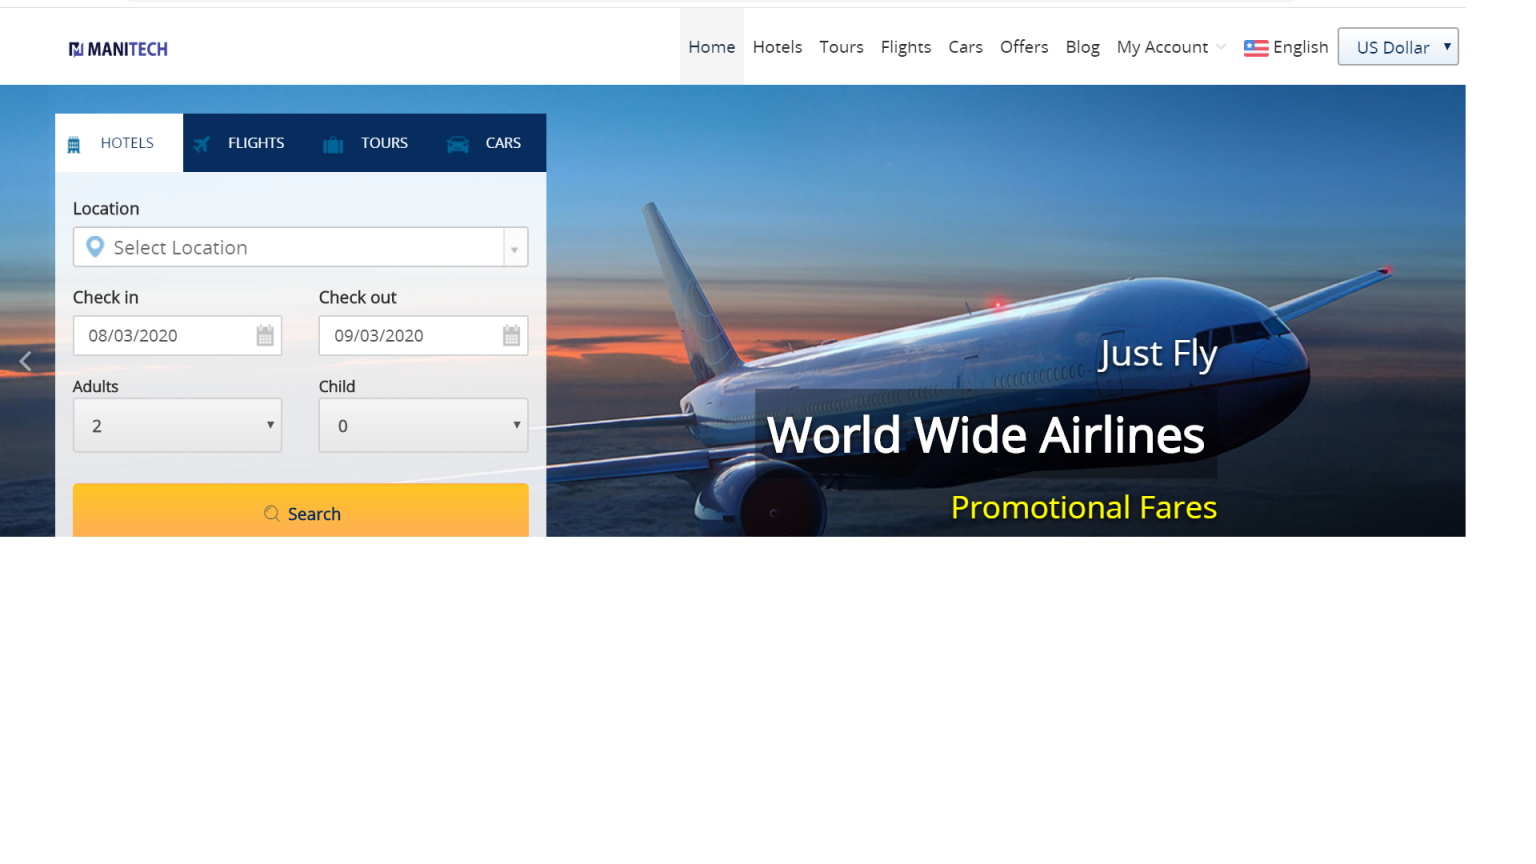 travel agent to book international flights